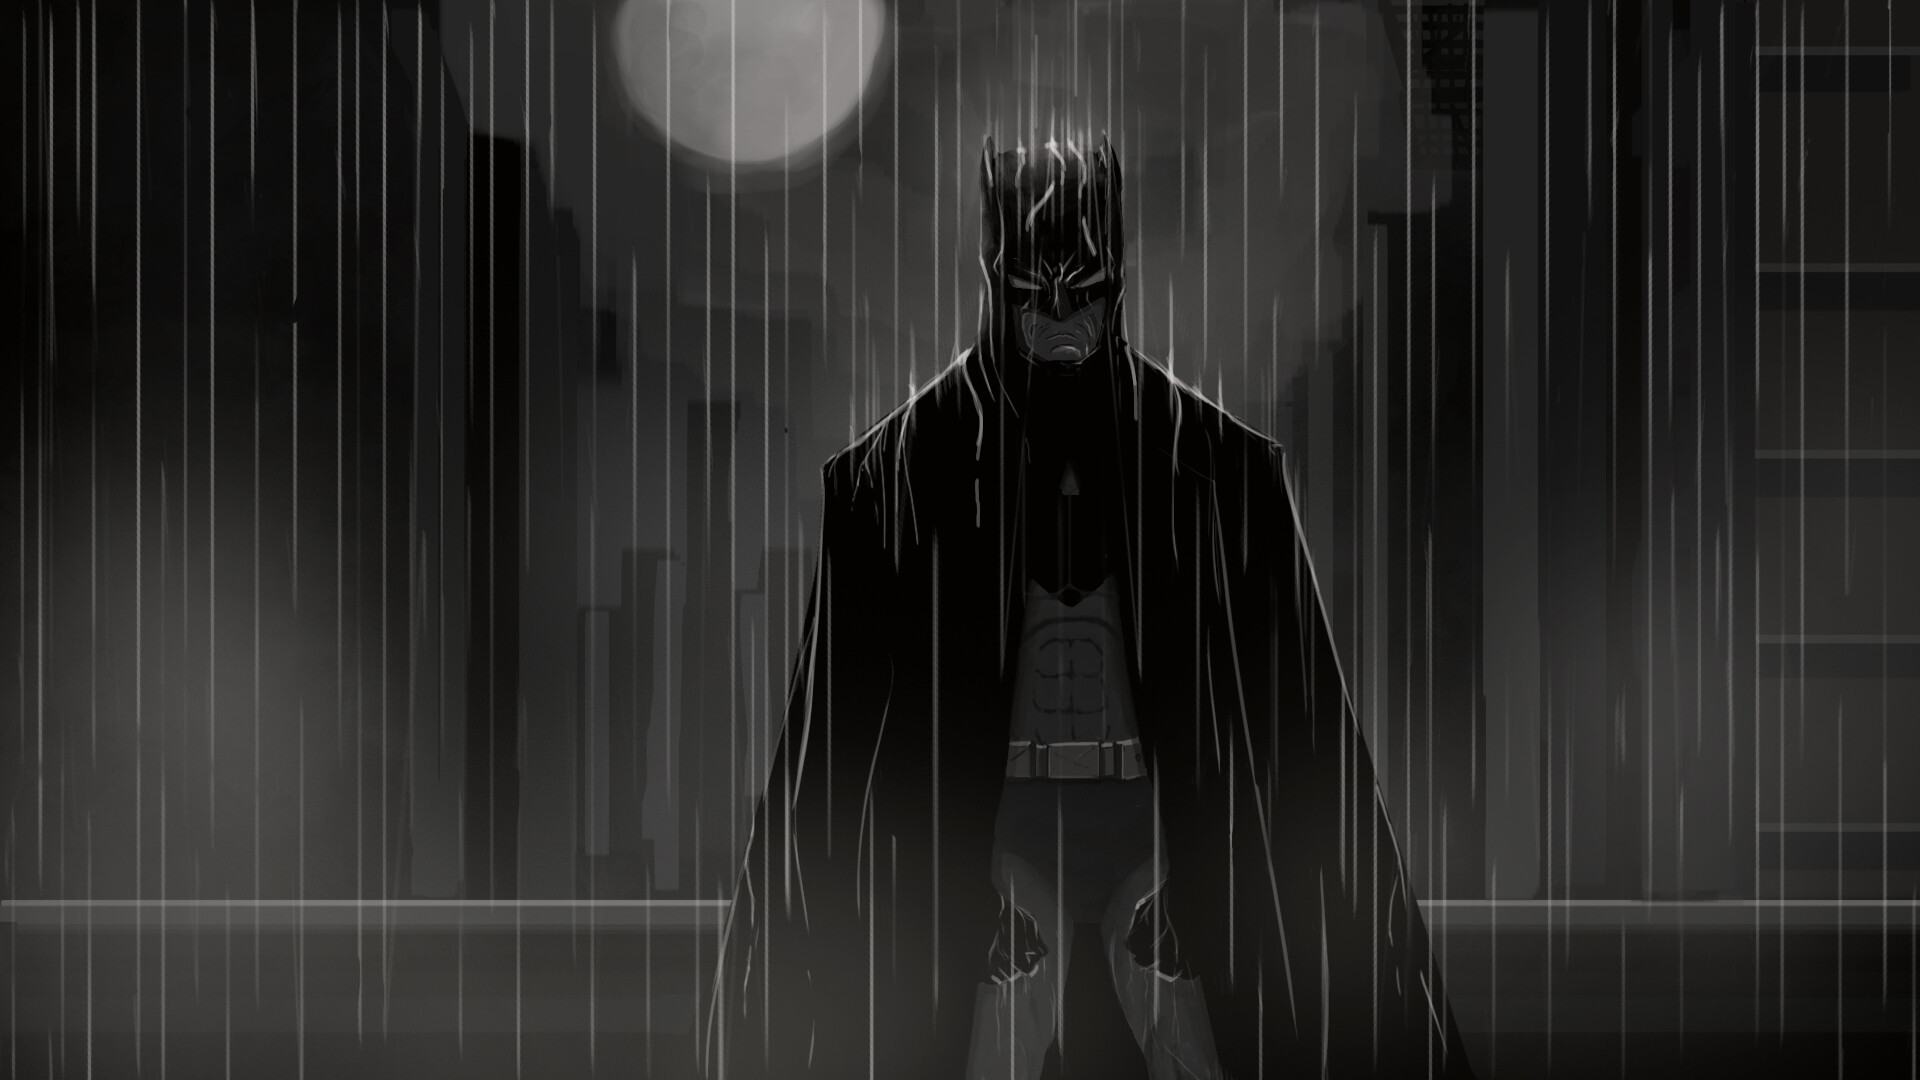 ArtStation - Batman under the rain